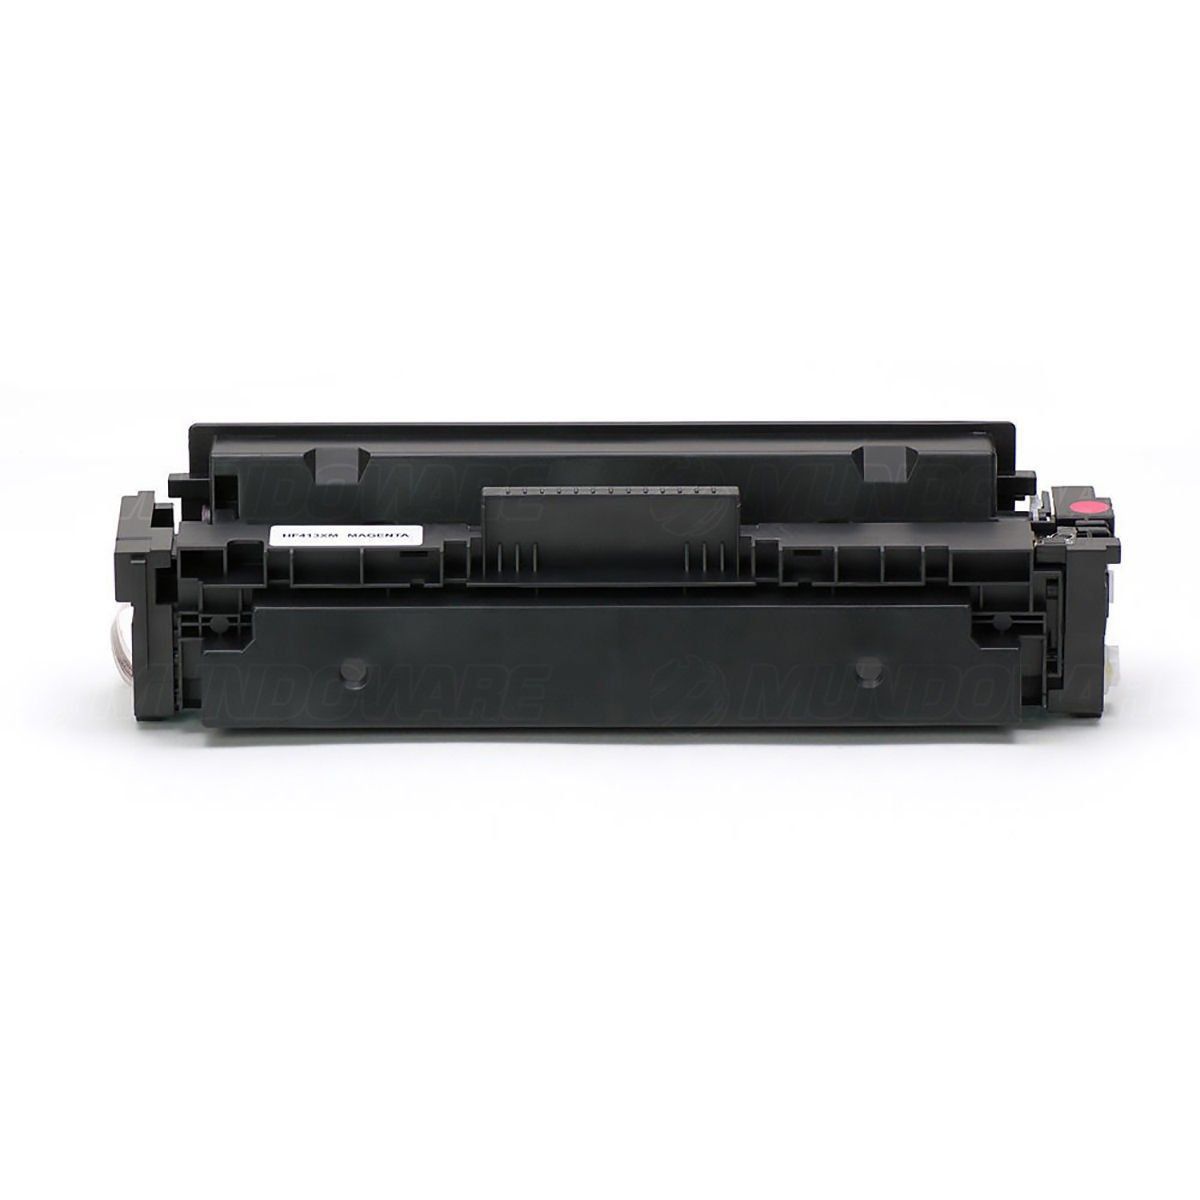 Compatível: Toner CF413X 413X para Impressora HP M477 M452 M477fdn M452dw M477fnw M452nw / Magenta / 5.000